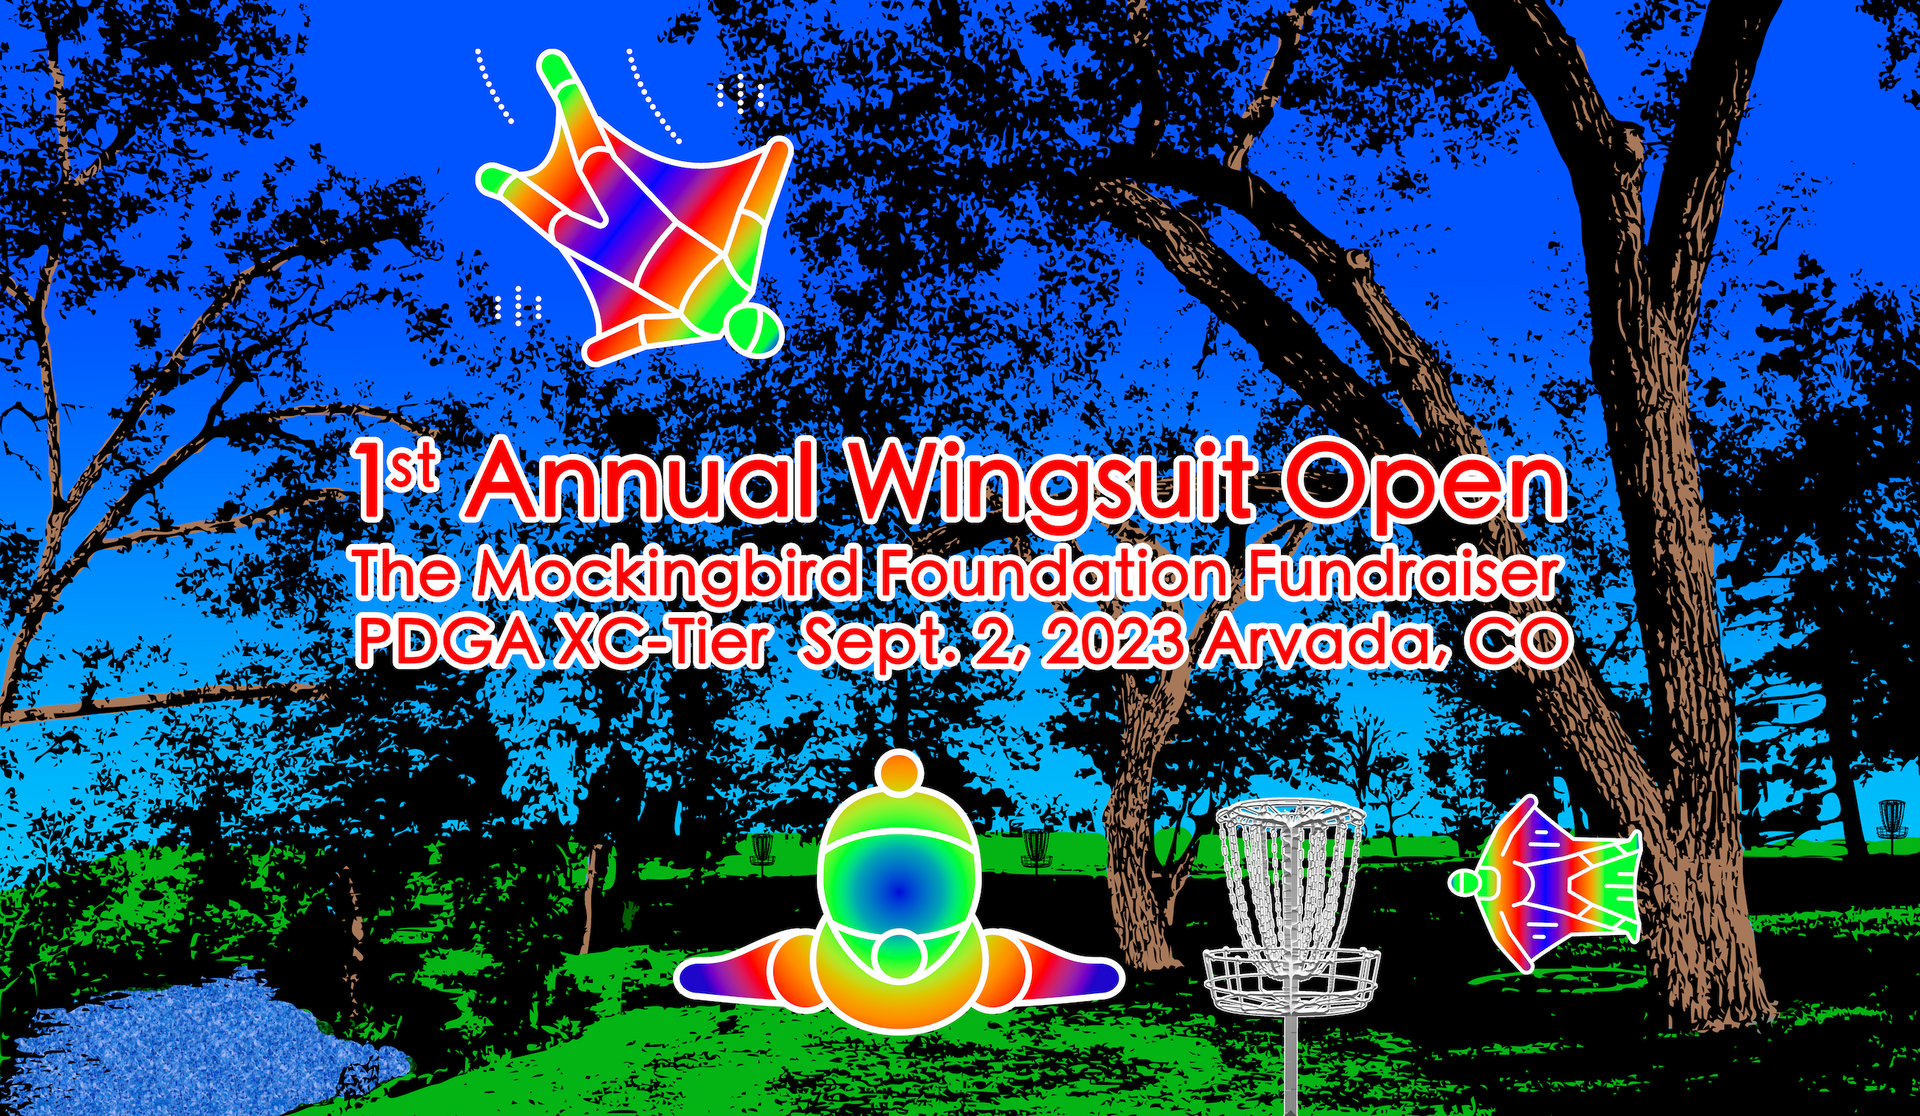 Wingsuit Open Fundraiser Disc Golf Tournament